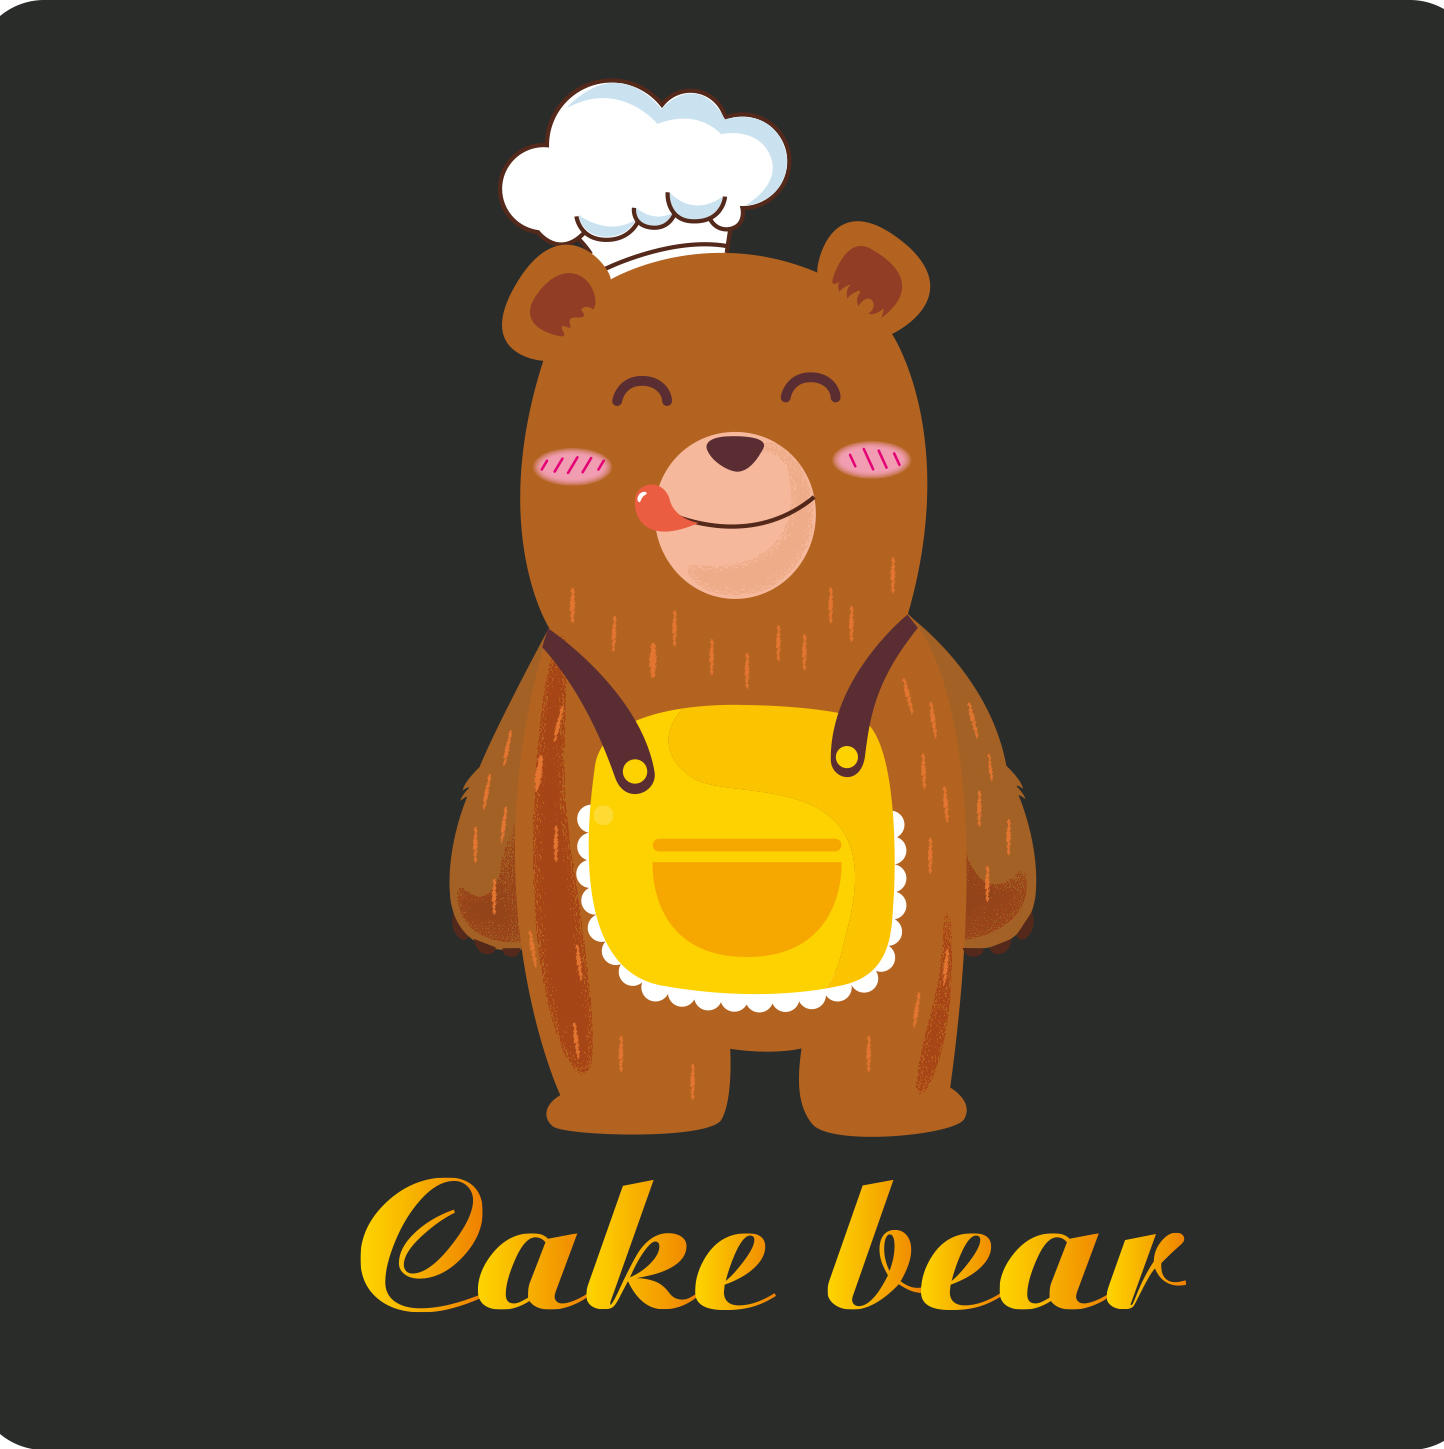 榴芒熊CakeBear